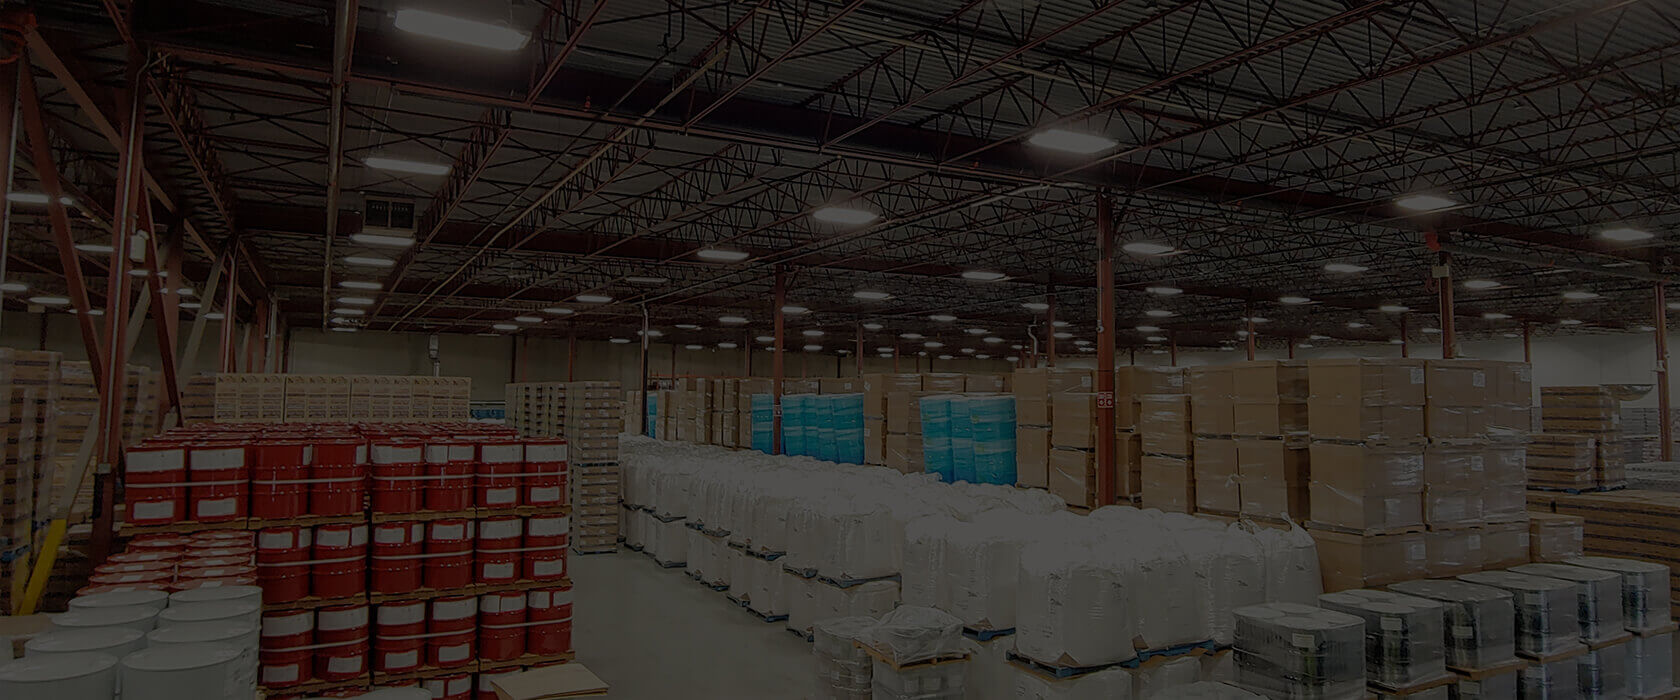 MTE warehouse_energy & industrial goods